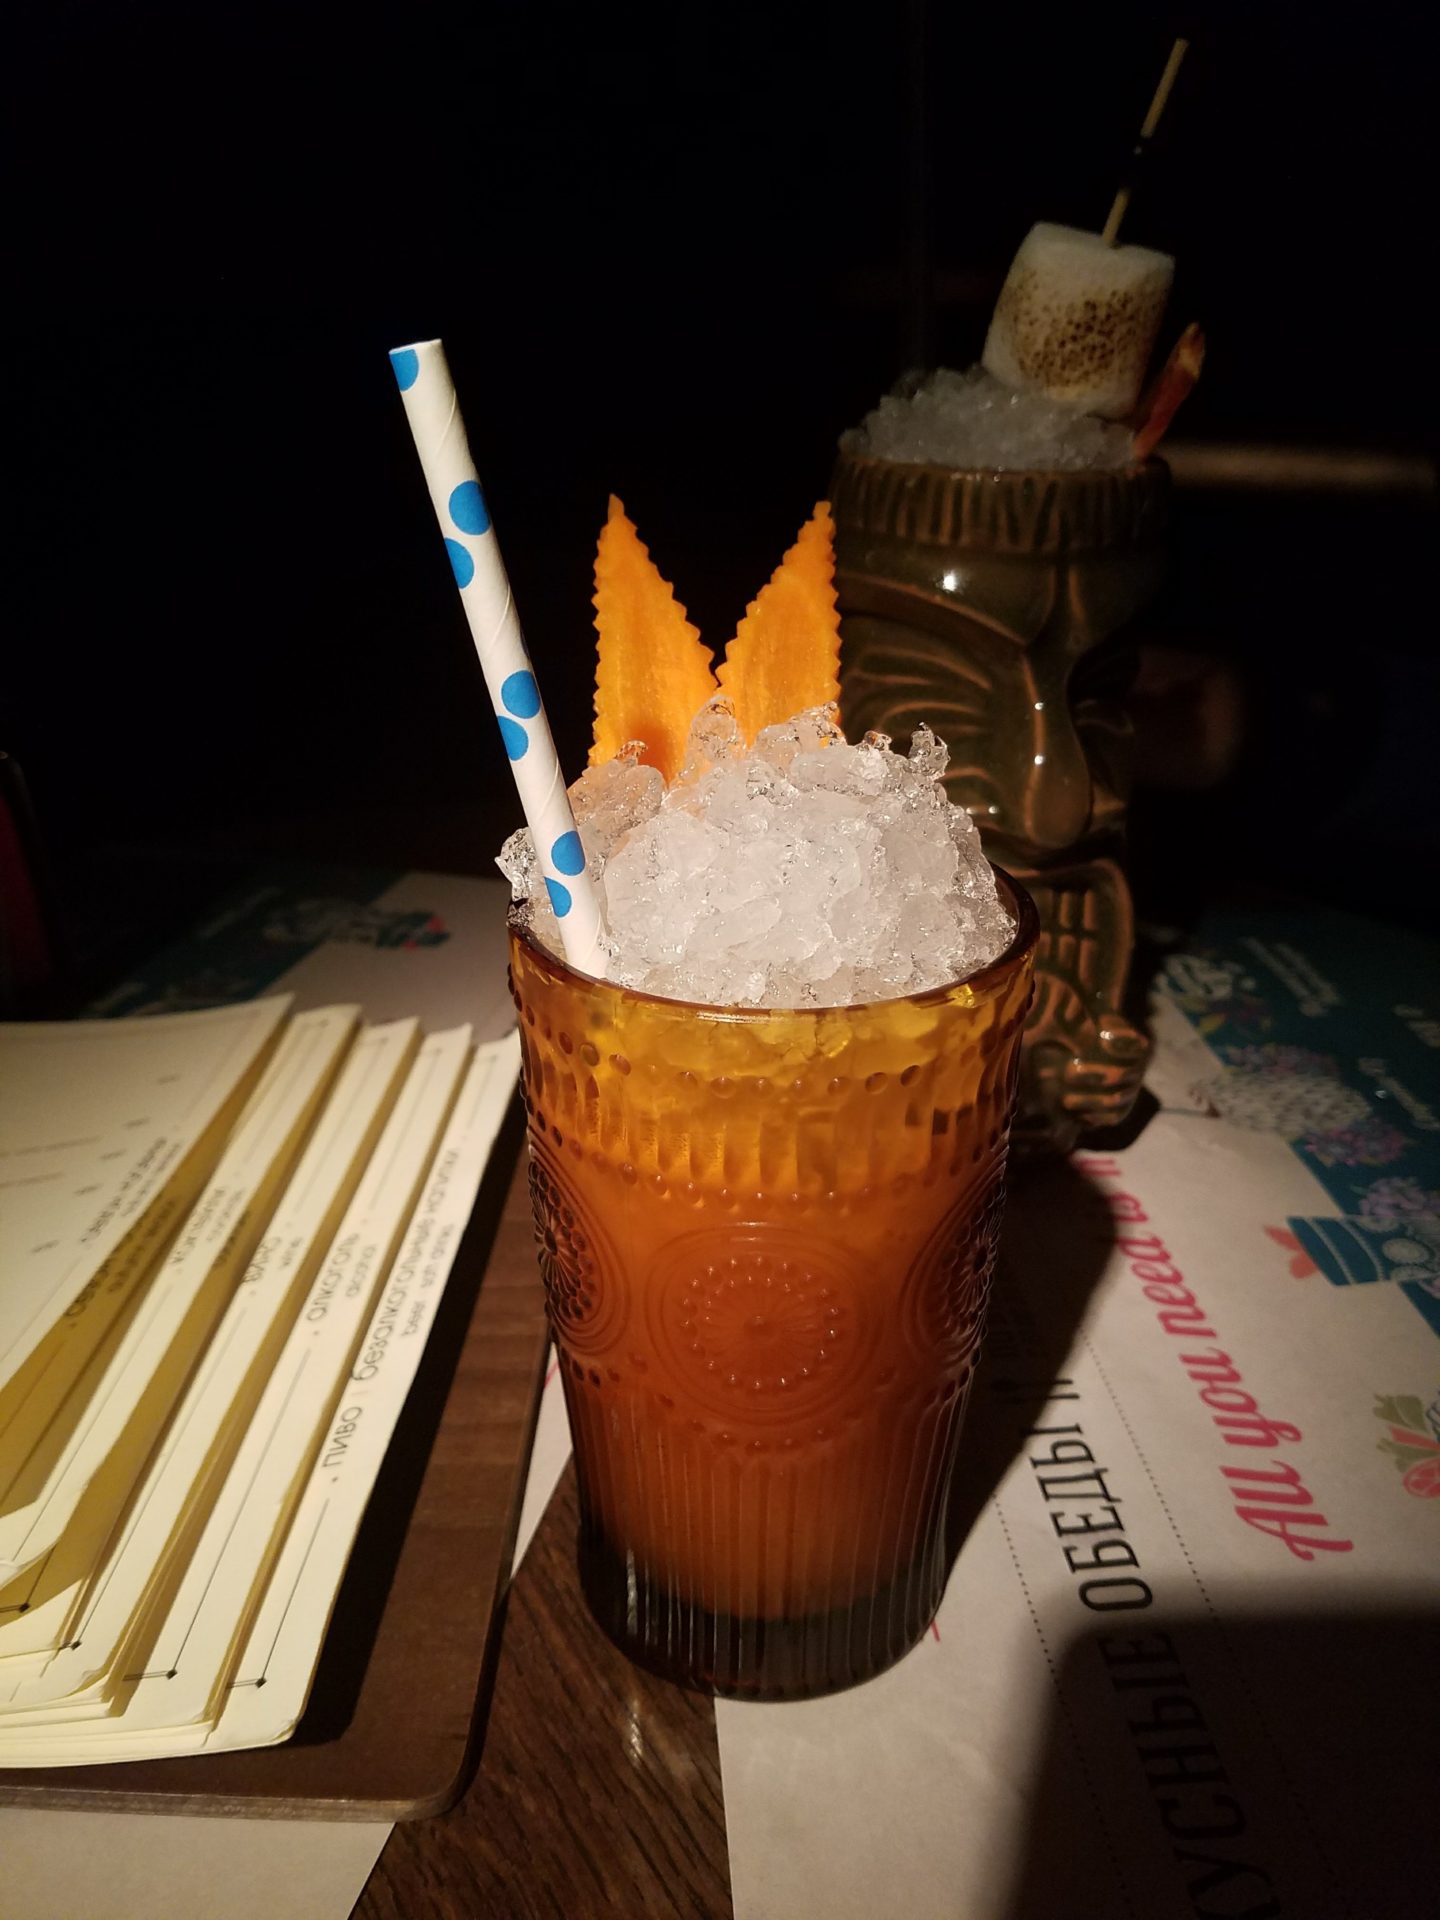 a glass with ice and orange liquid